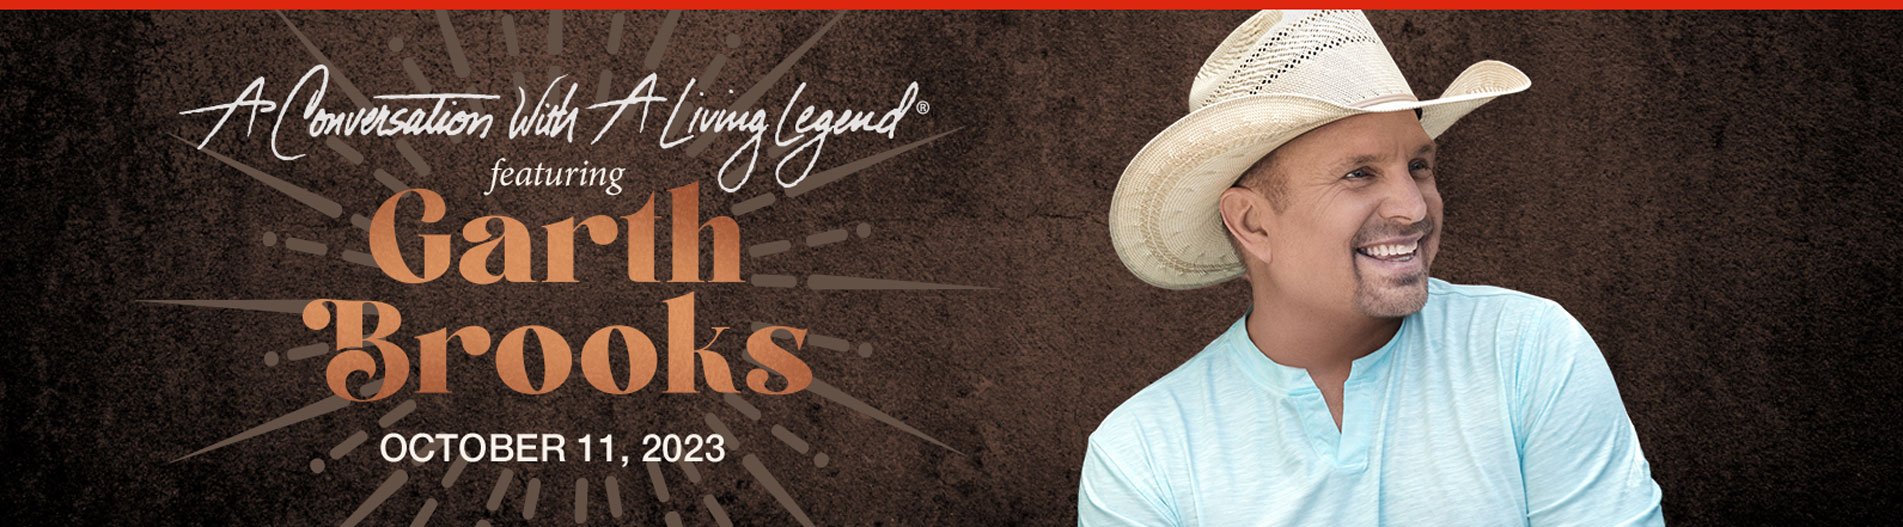 A conversation with a Living Legend featuring Garth Brooks | October 11, 2023